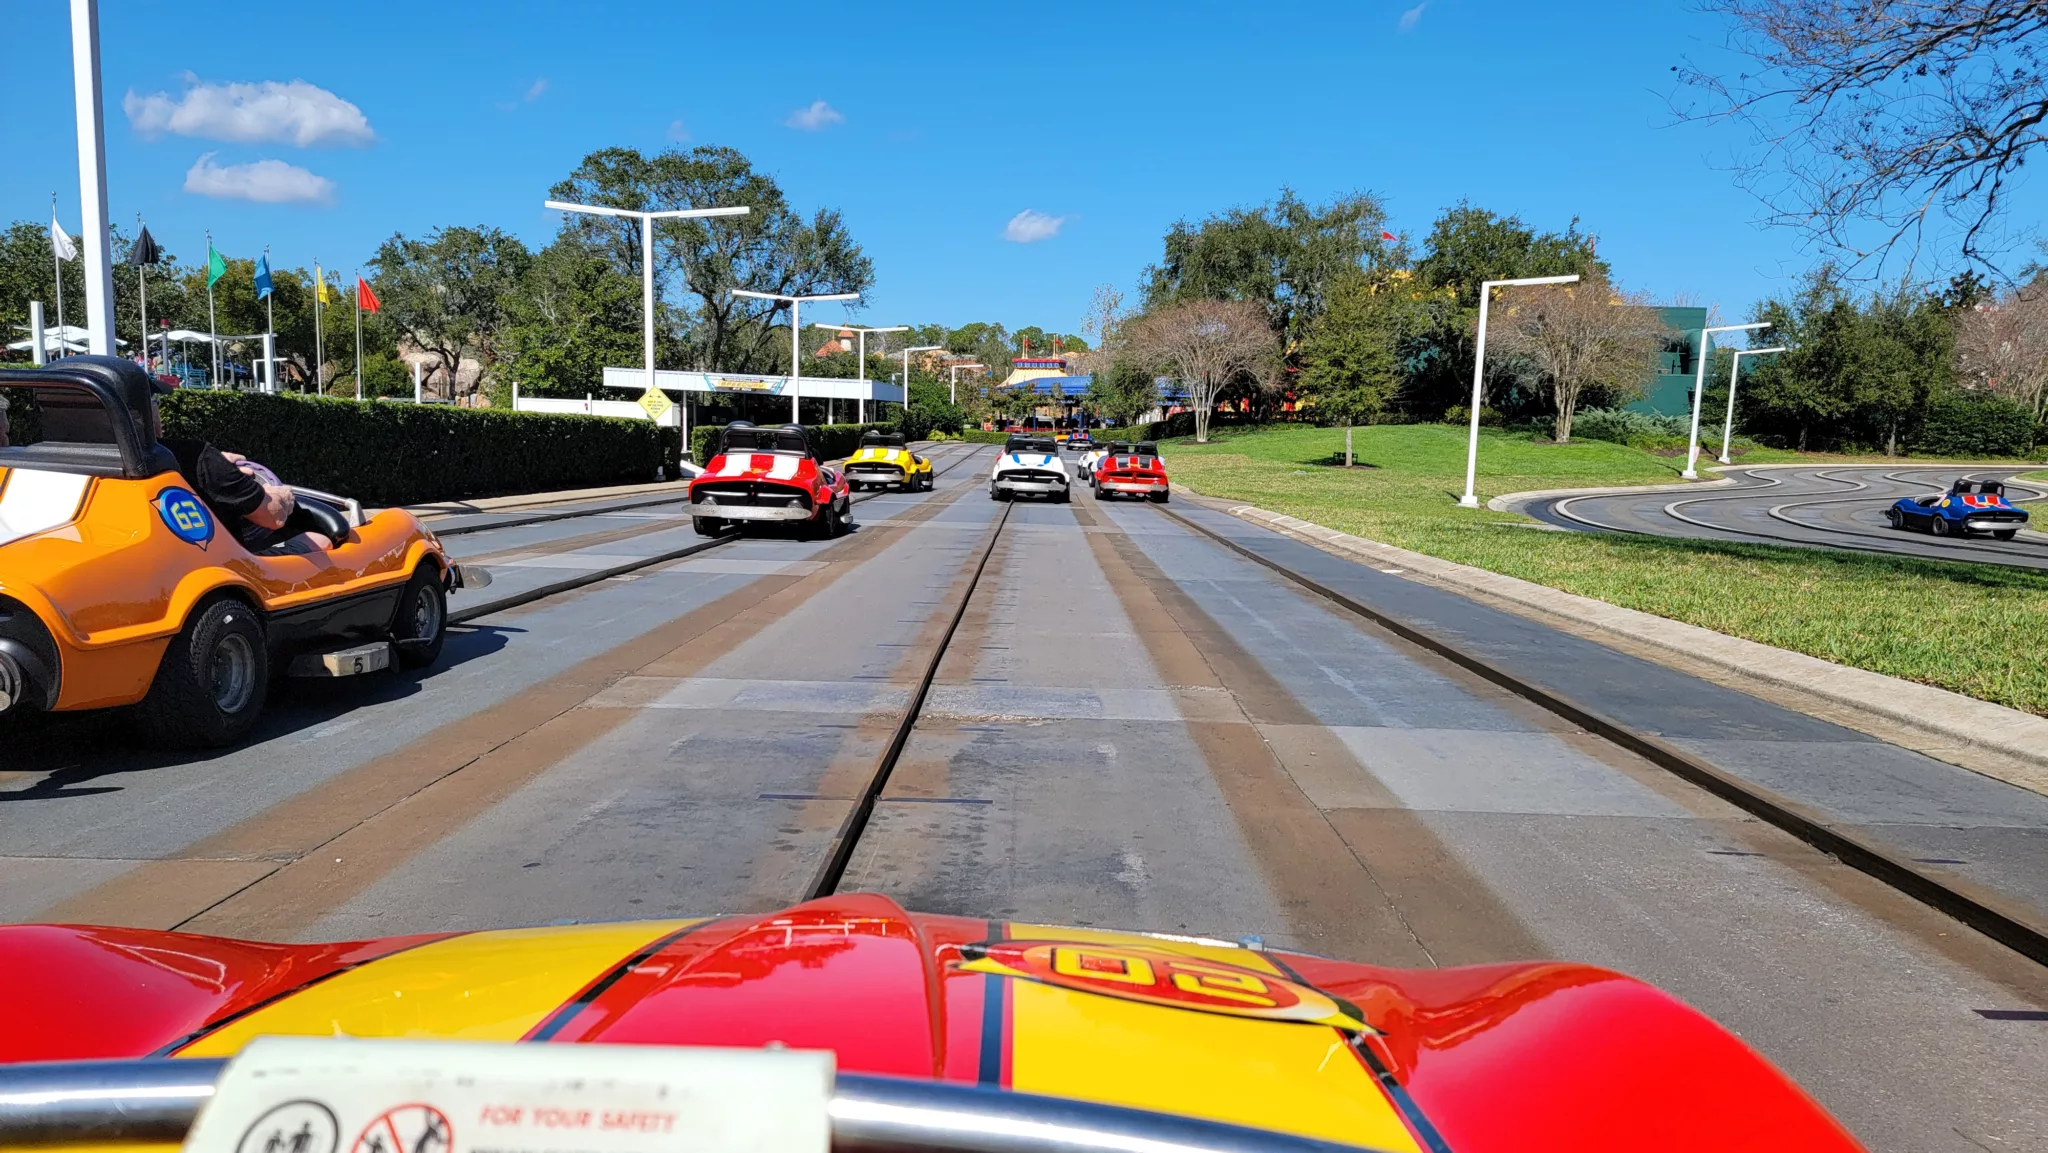 Autopia aka Tomorrowland Speedway in Disneyland Removing Gas Powered Vehicles